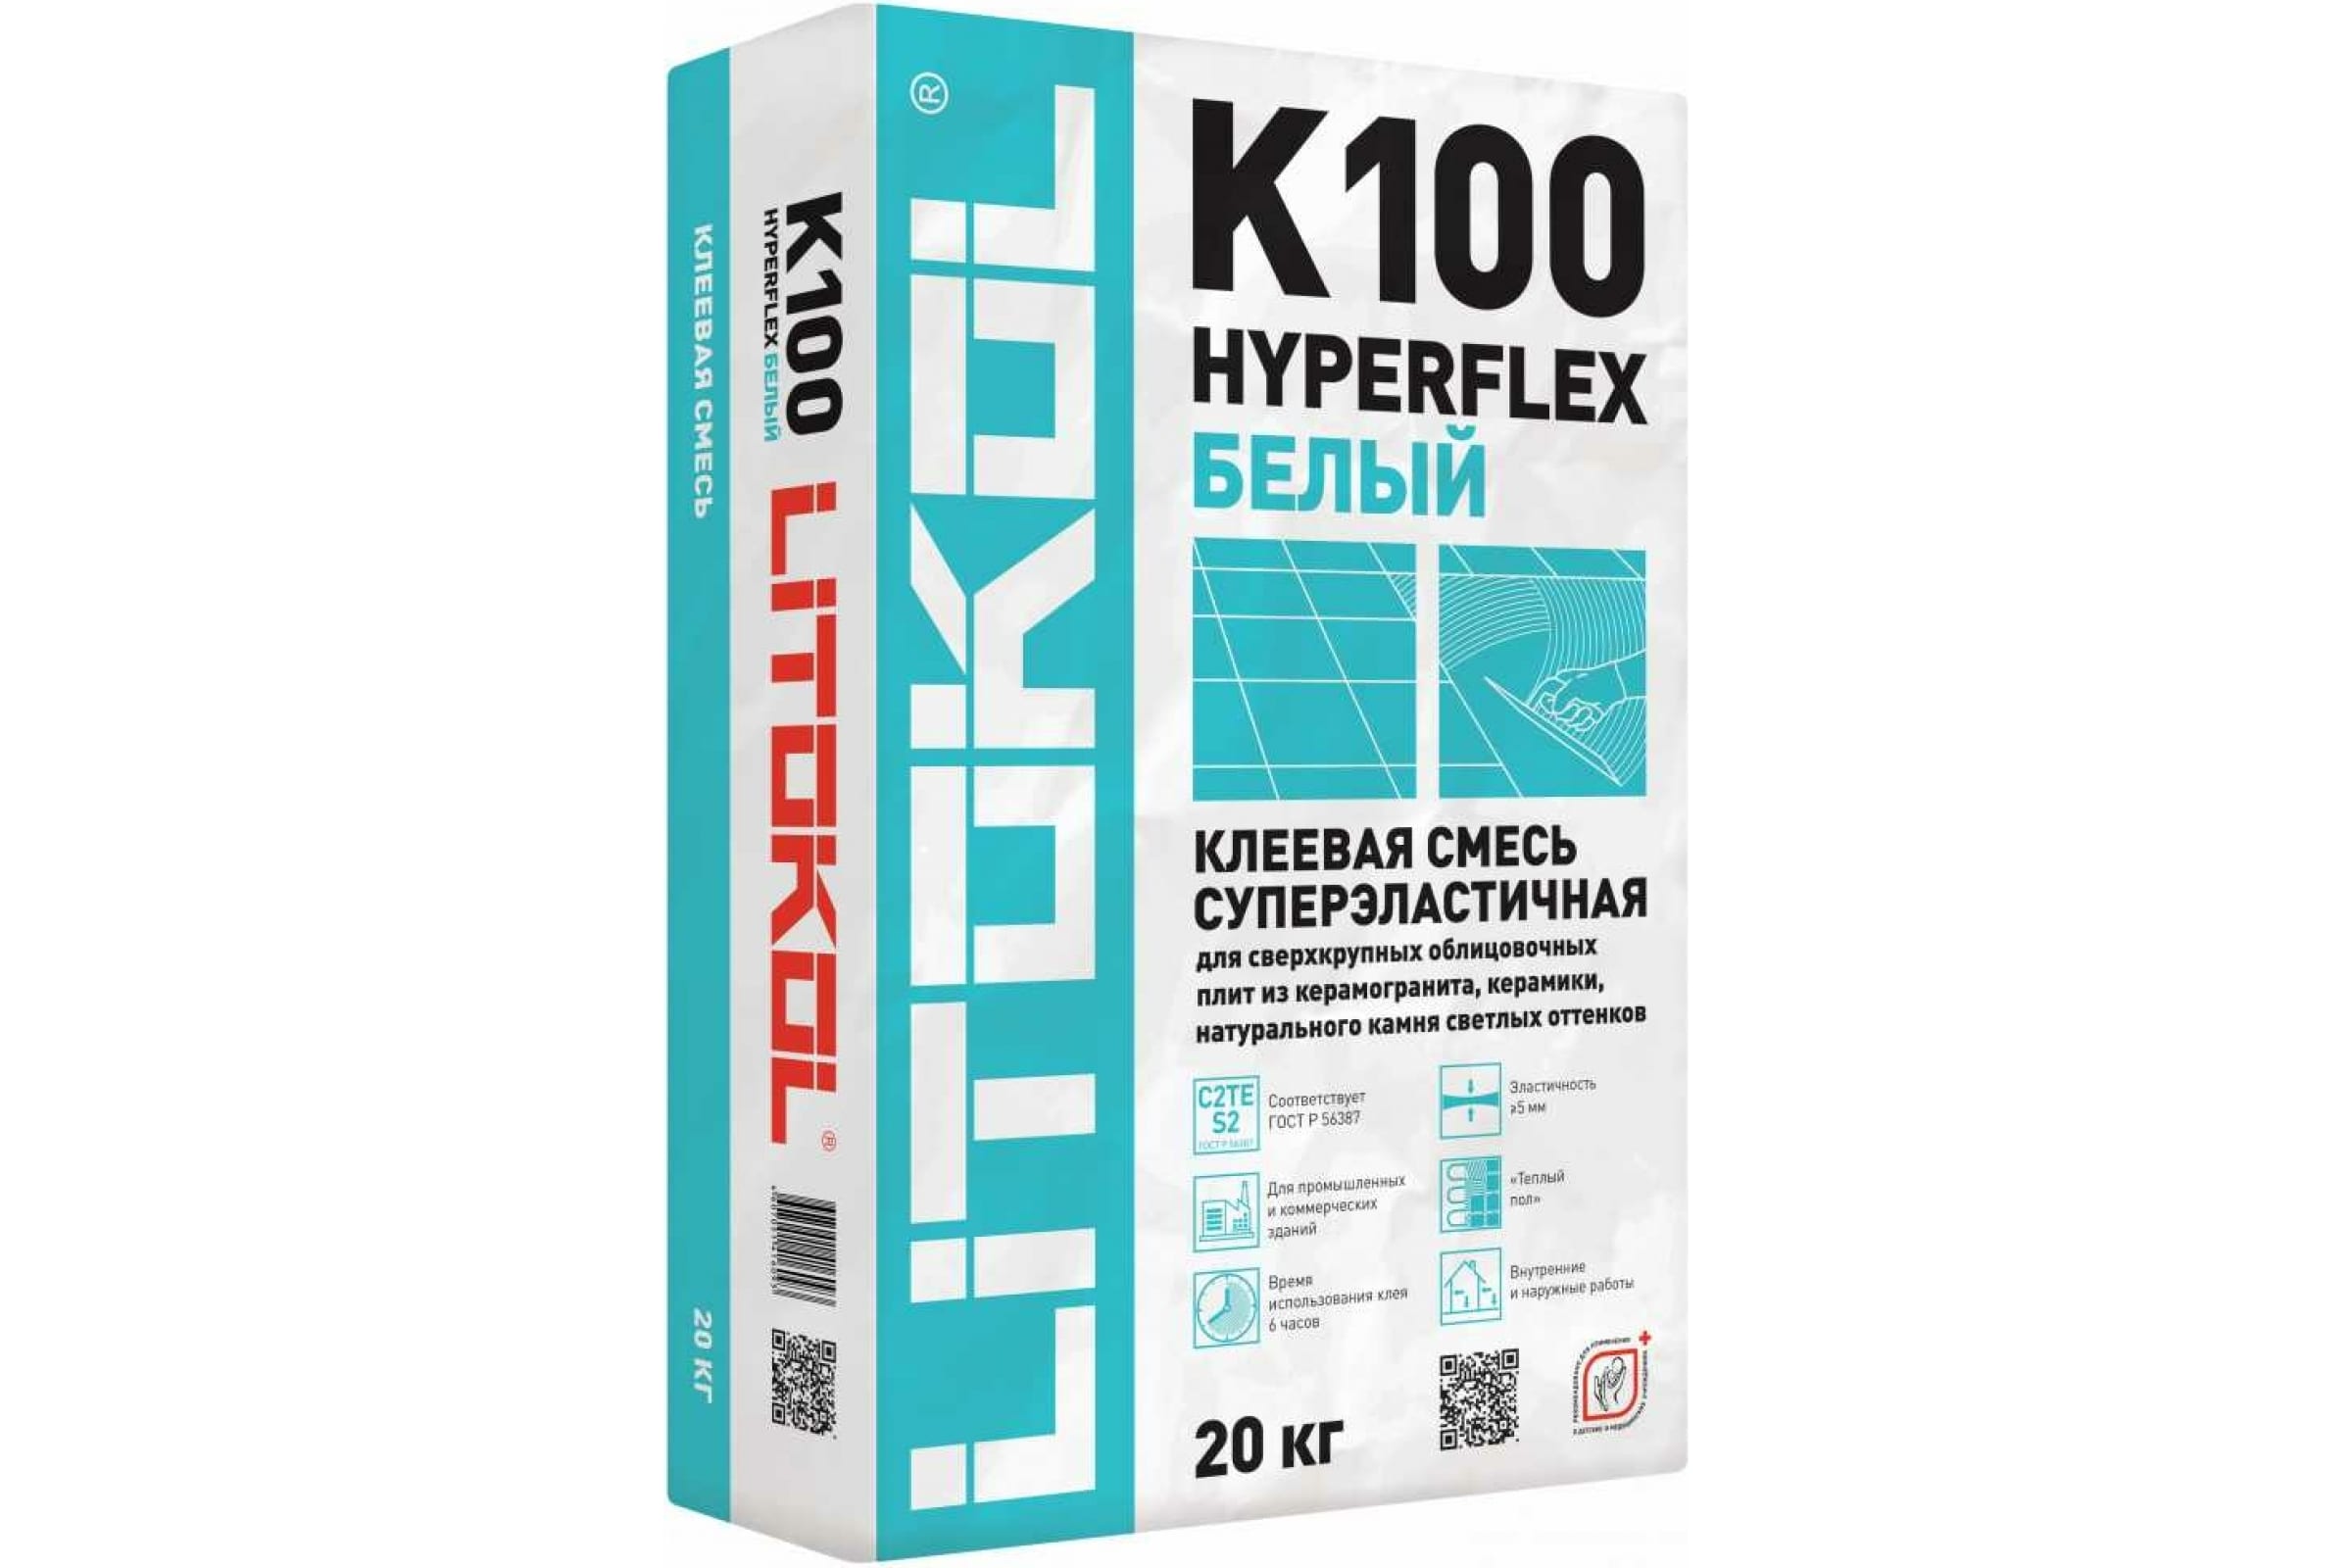 LITOKOL HYPERFLEX K100 белый-клеевая смесь (20kg bag) 479930002